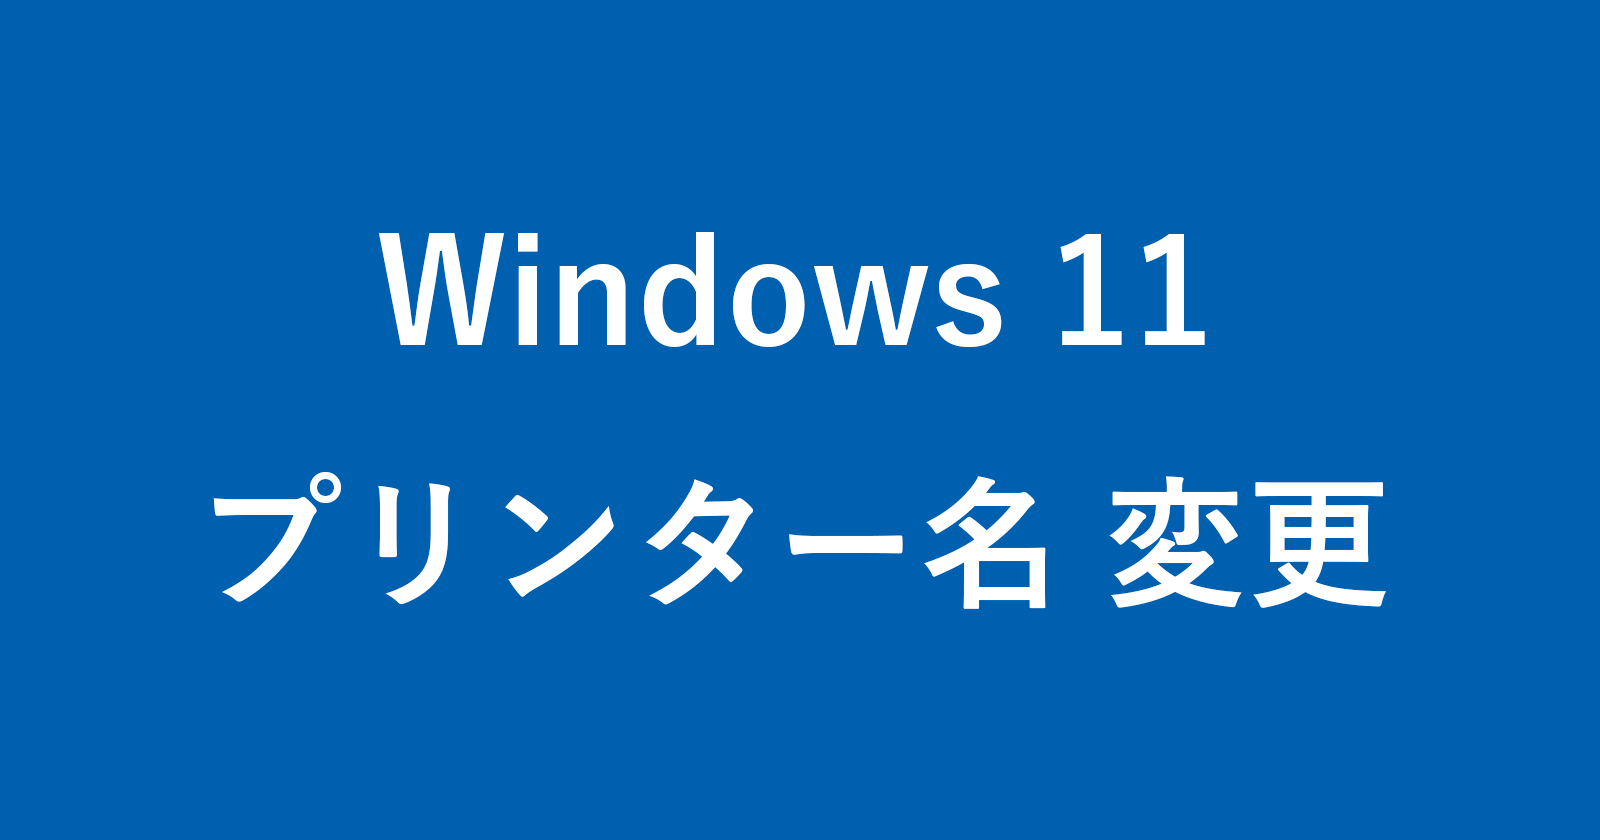 windows 11 printer name